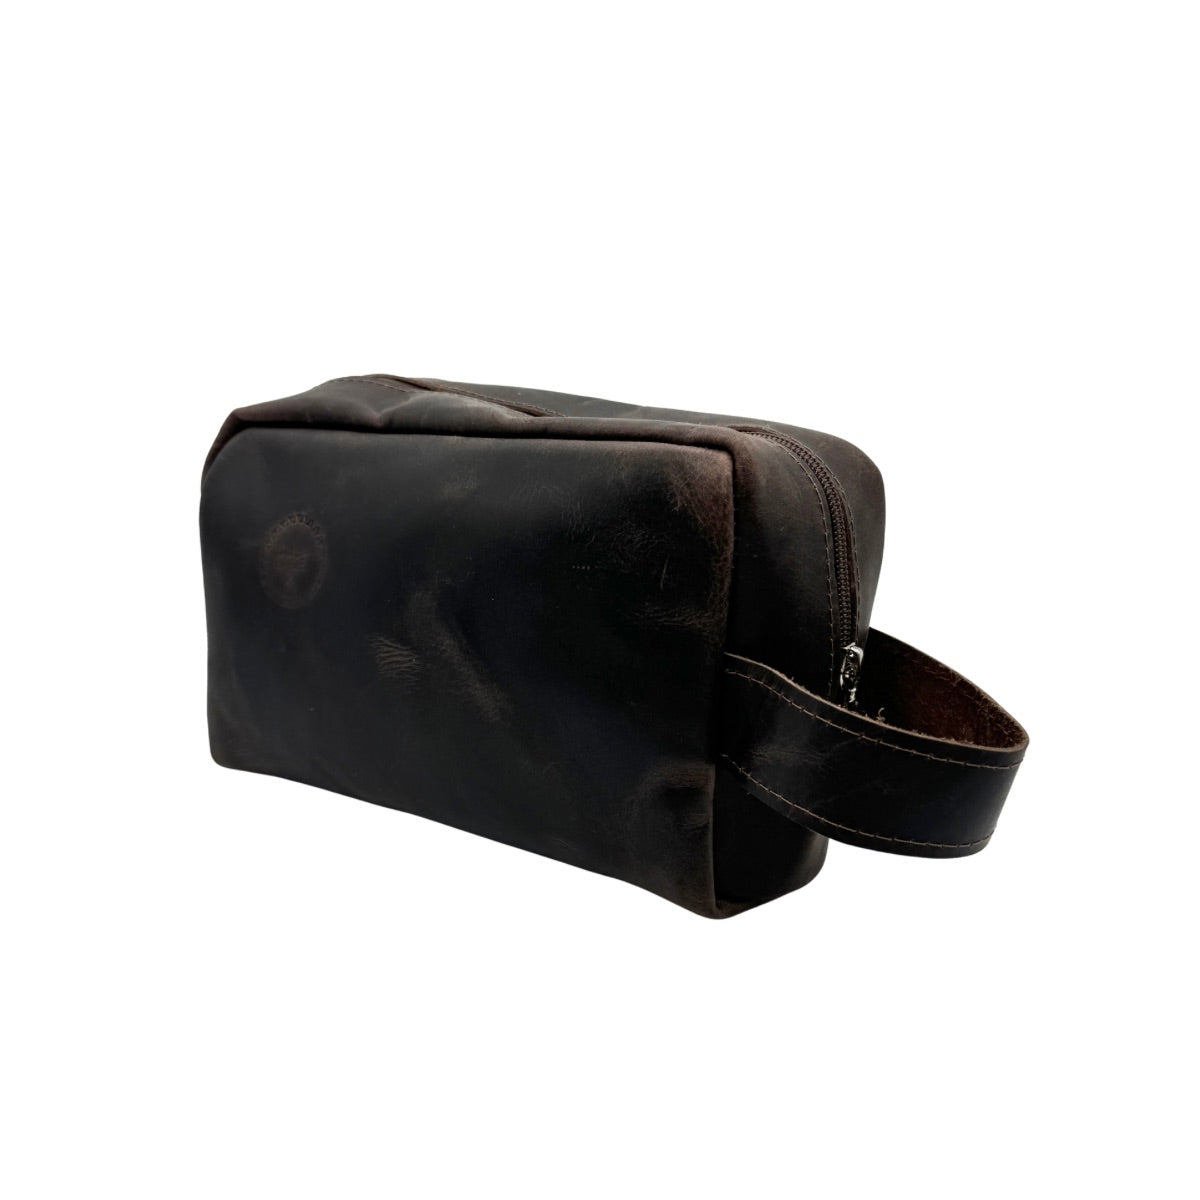 Leather Toiletry Bag - Dark Brown